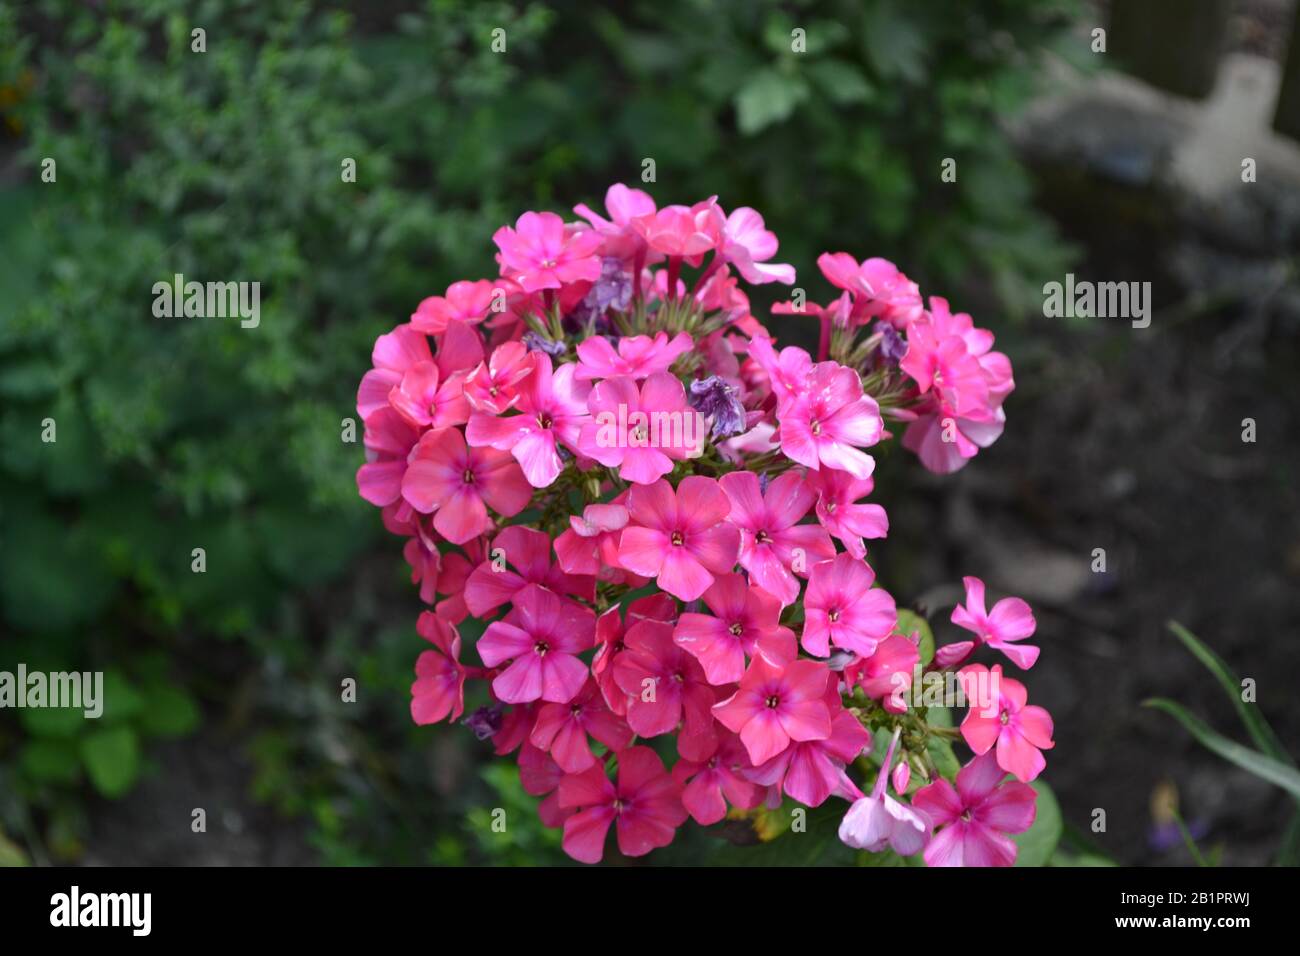 Phlox. Polemoniaceae. Growing flowers. Flowerbed. Garden. Floriculture. Pink summery. Beautiful flowers. Green leaves. Bushes. Horizontal photo Stock Photo